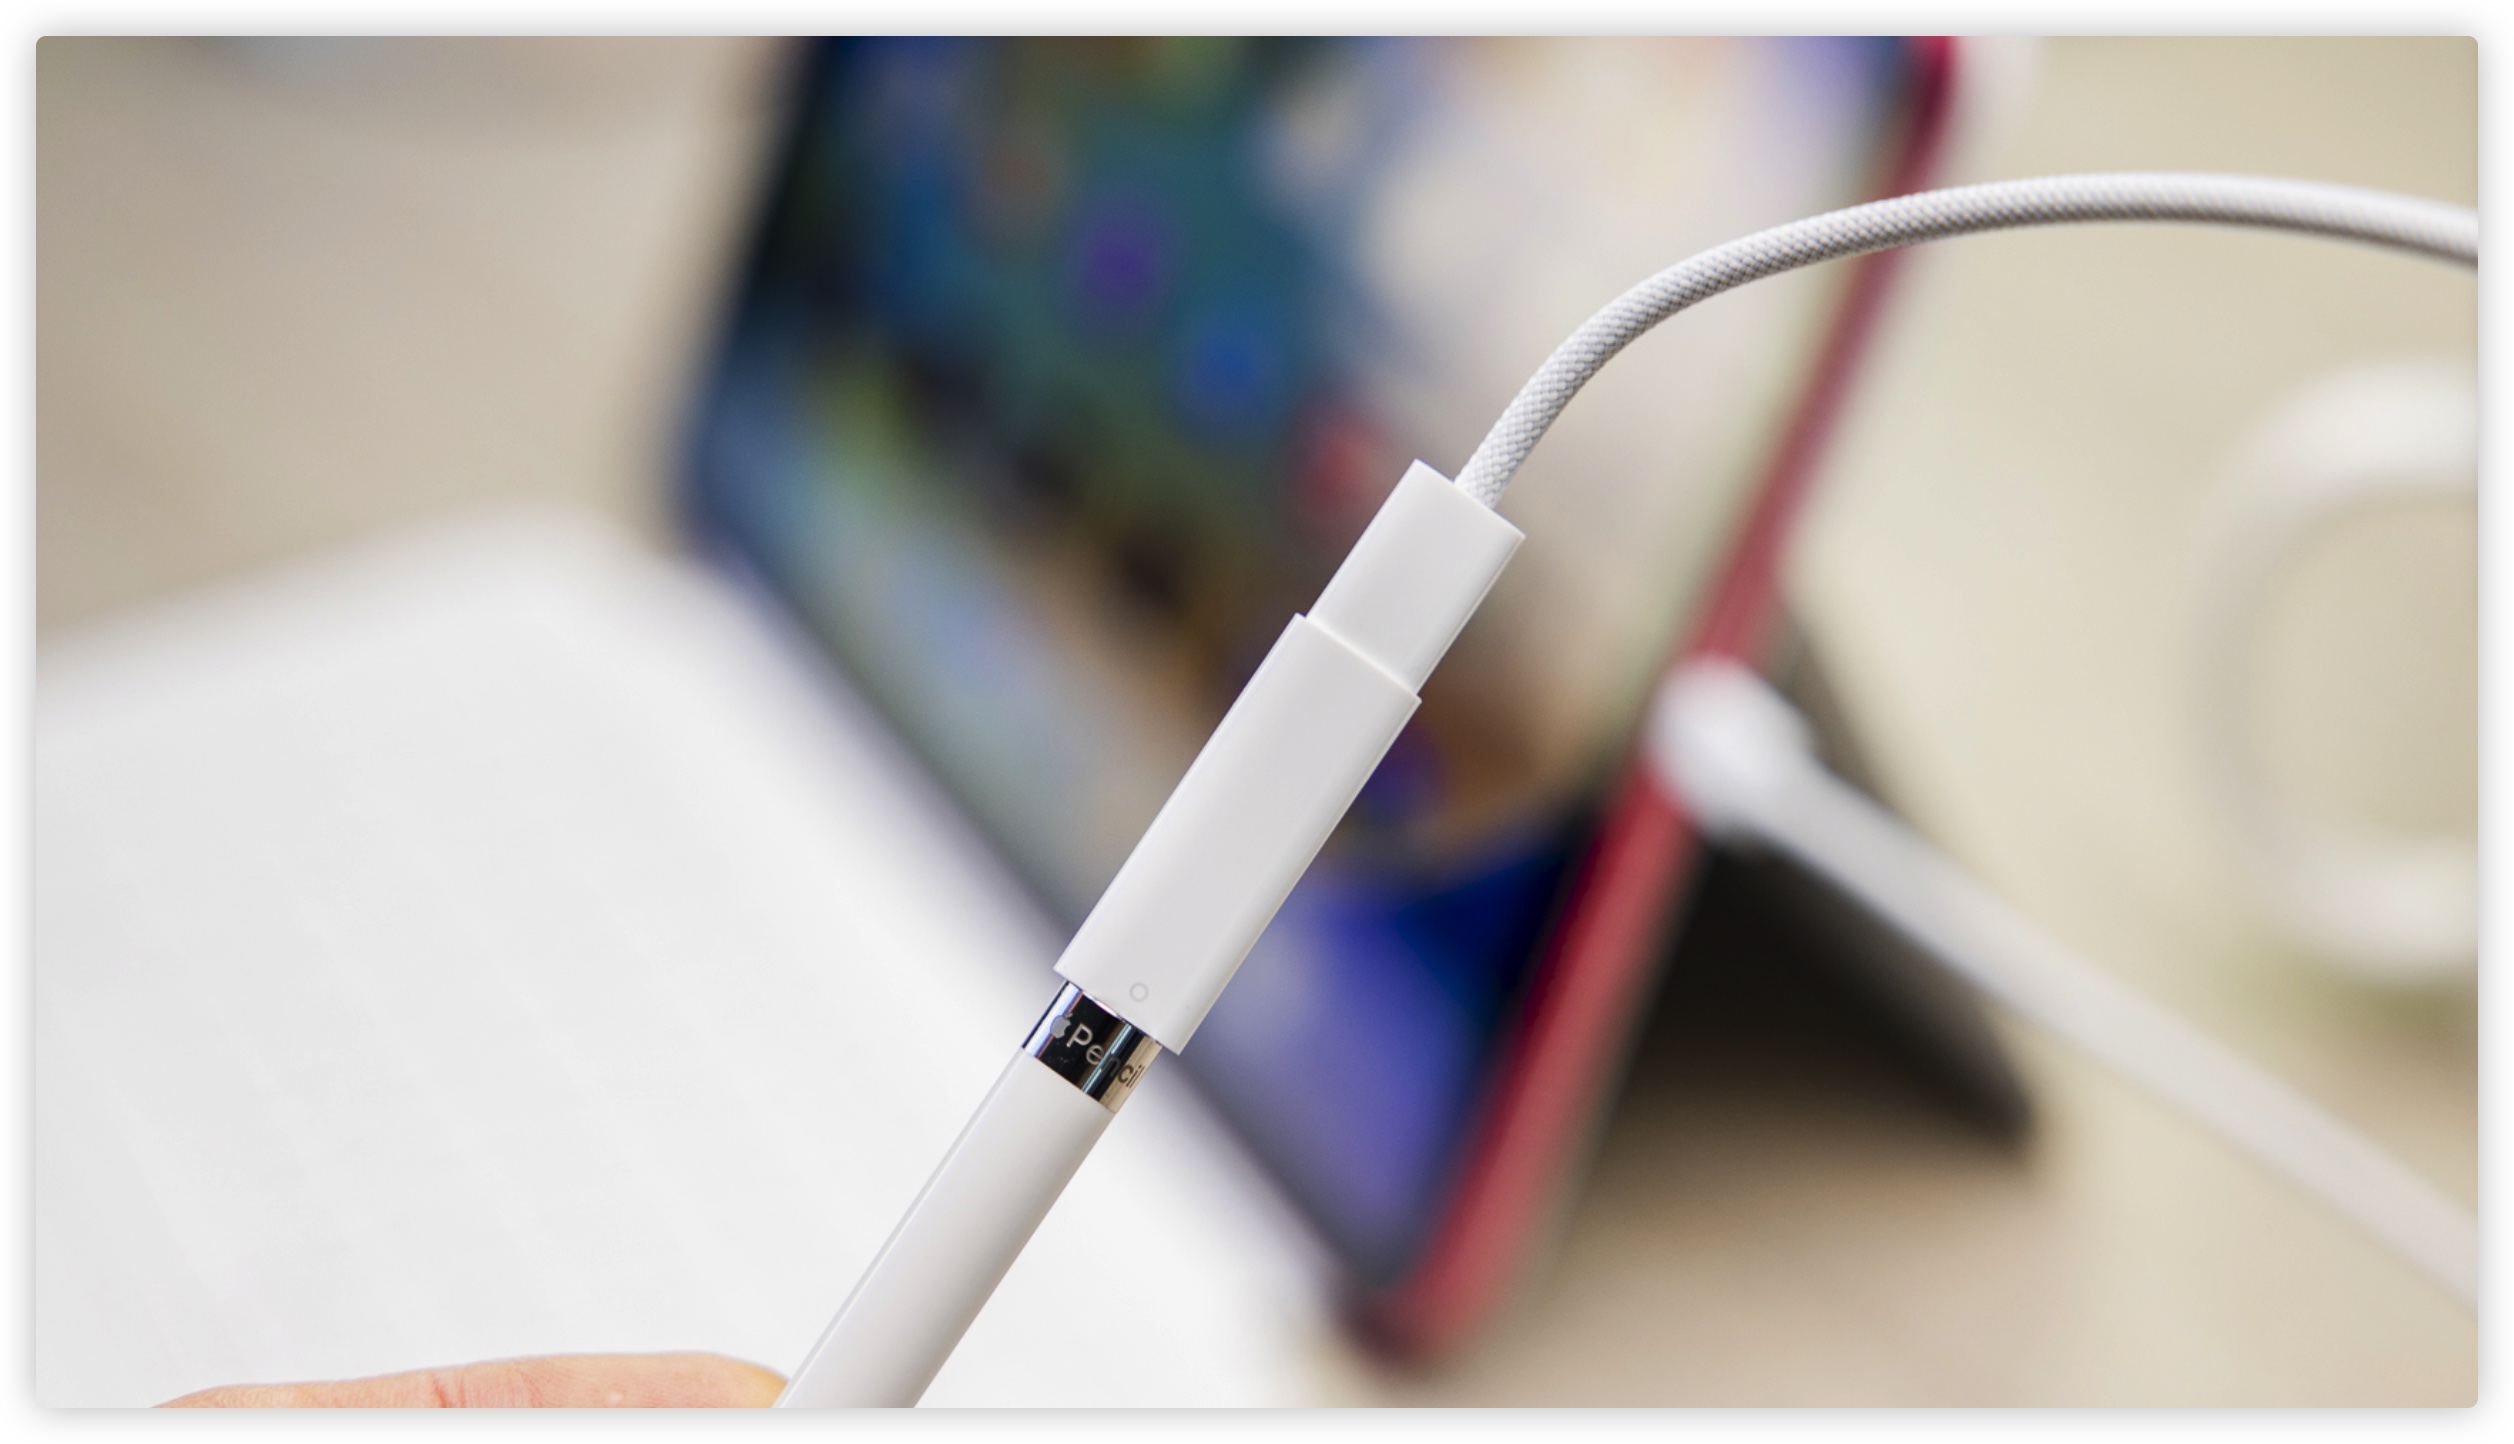 Apple Pencil 充電 電量顯示